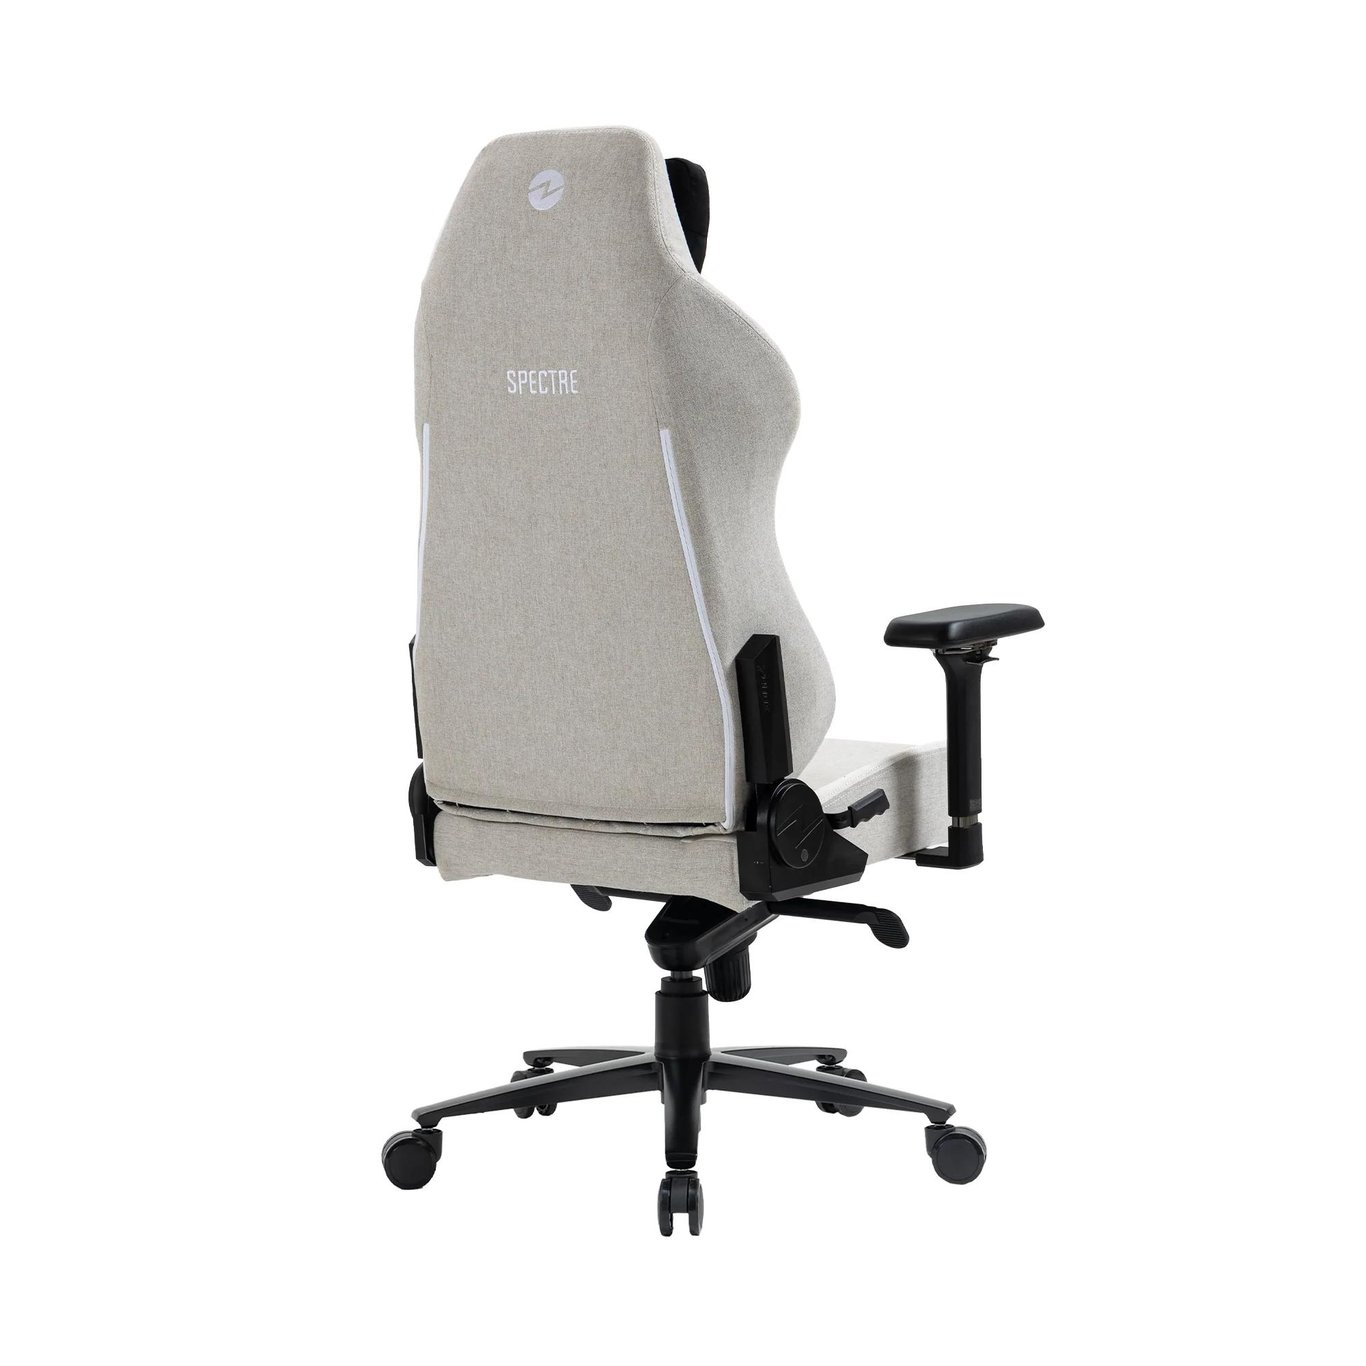 Zenox Spectre-MK2 Racing Chair  - Fabric/Light Grey /-4